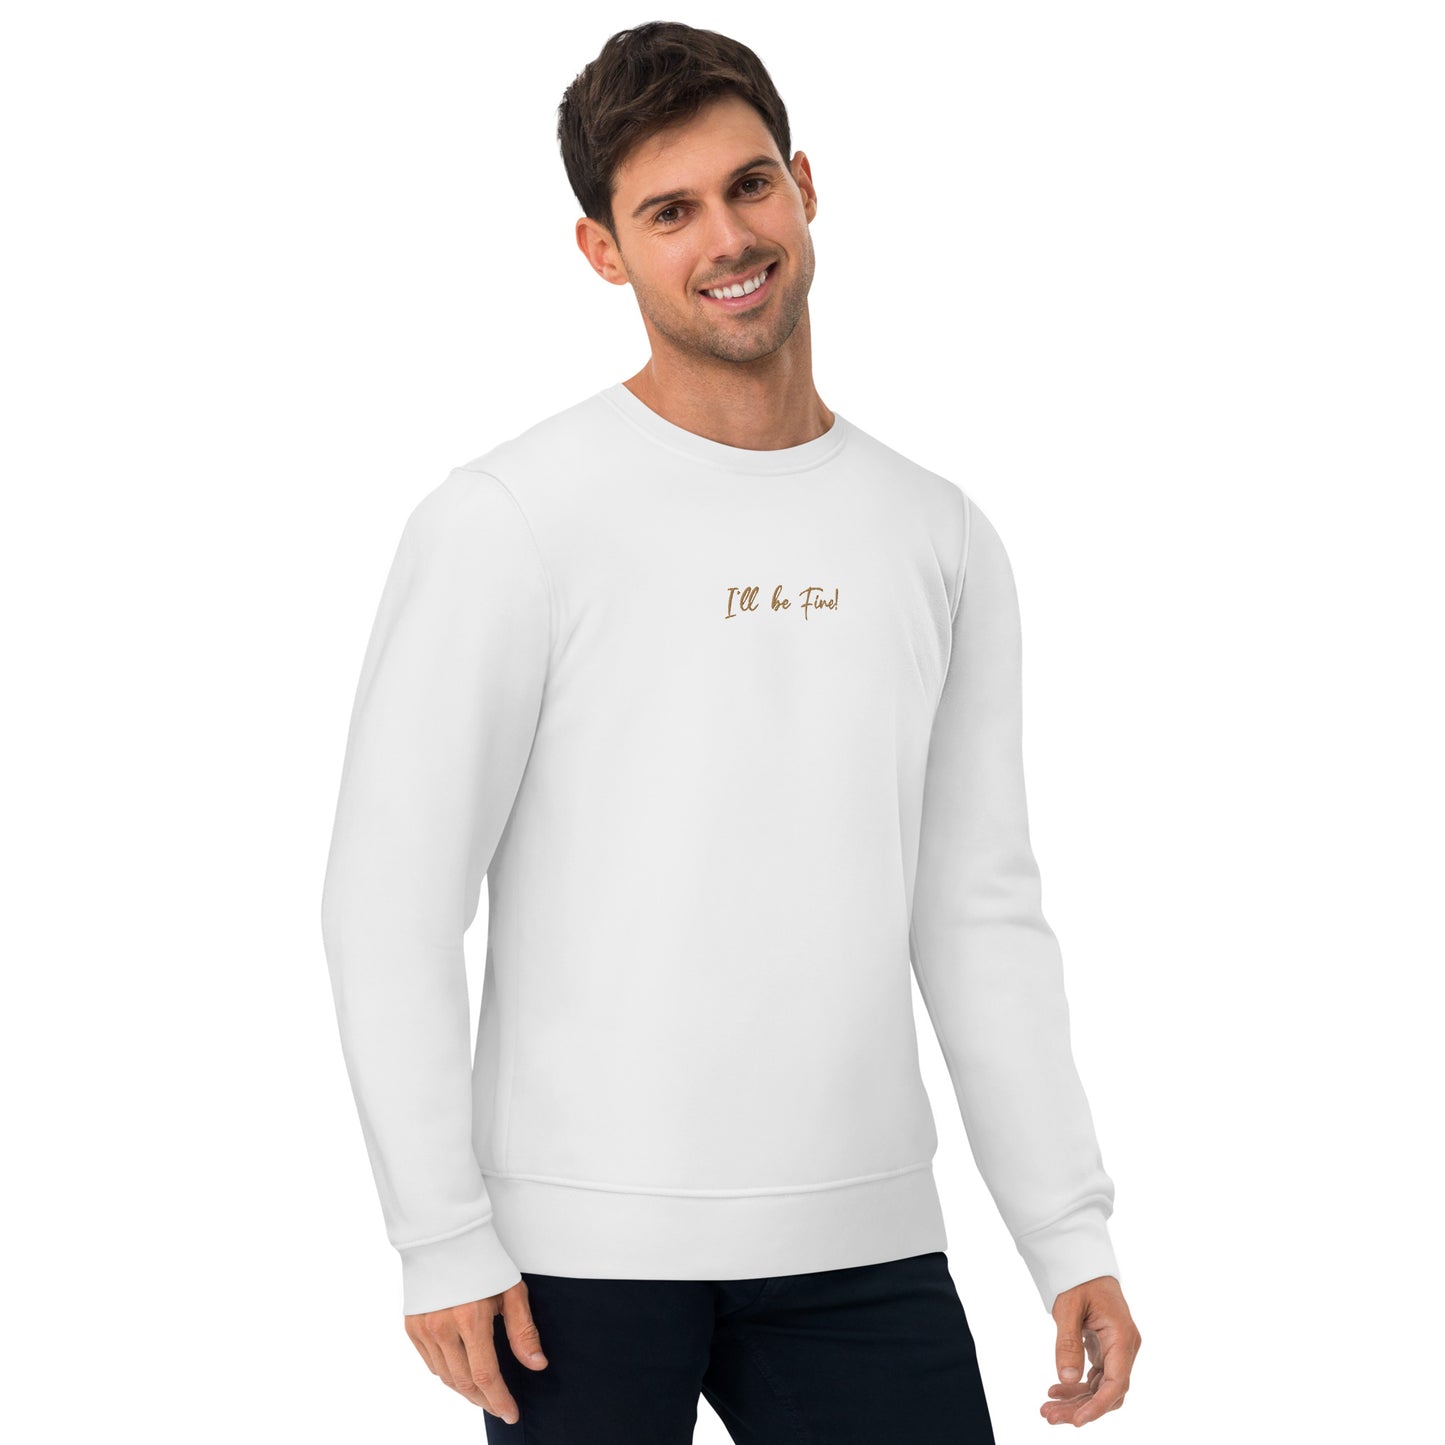 I'll Be Fine! Men's Organic Cotton Sweatshirt